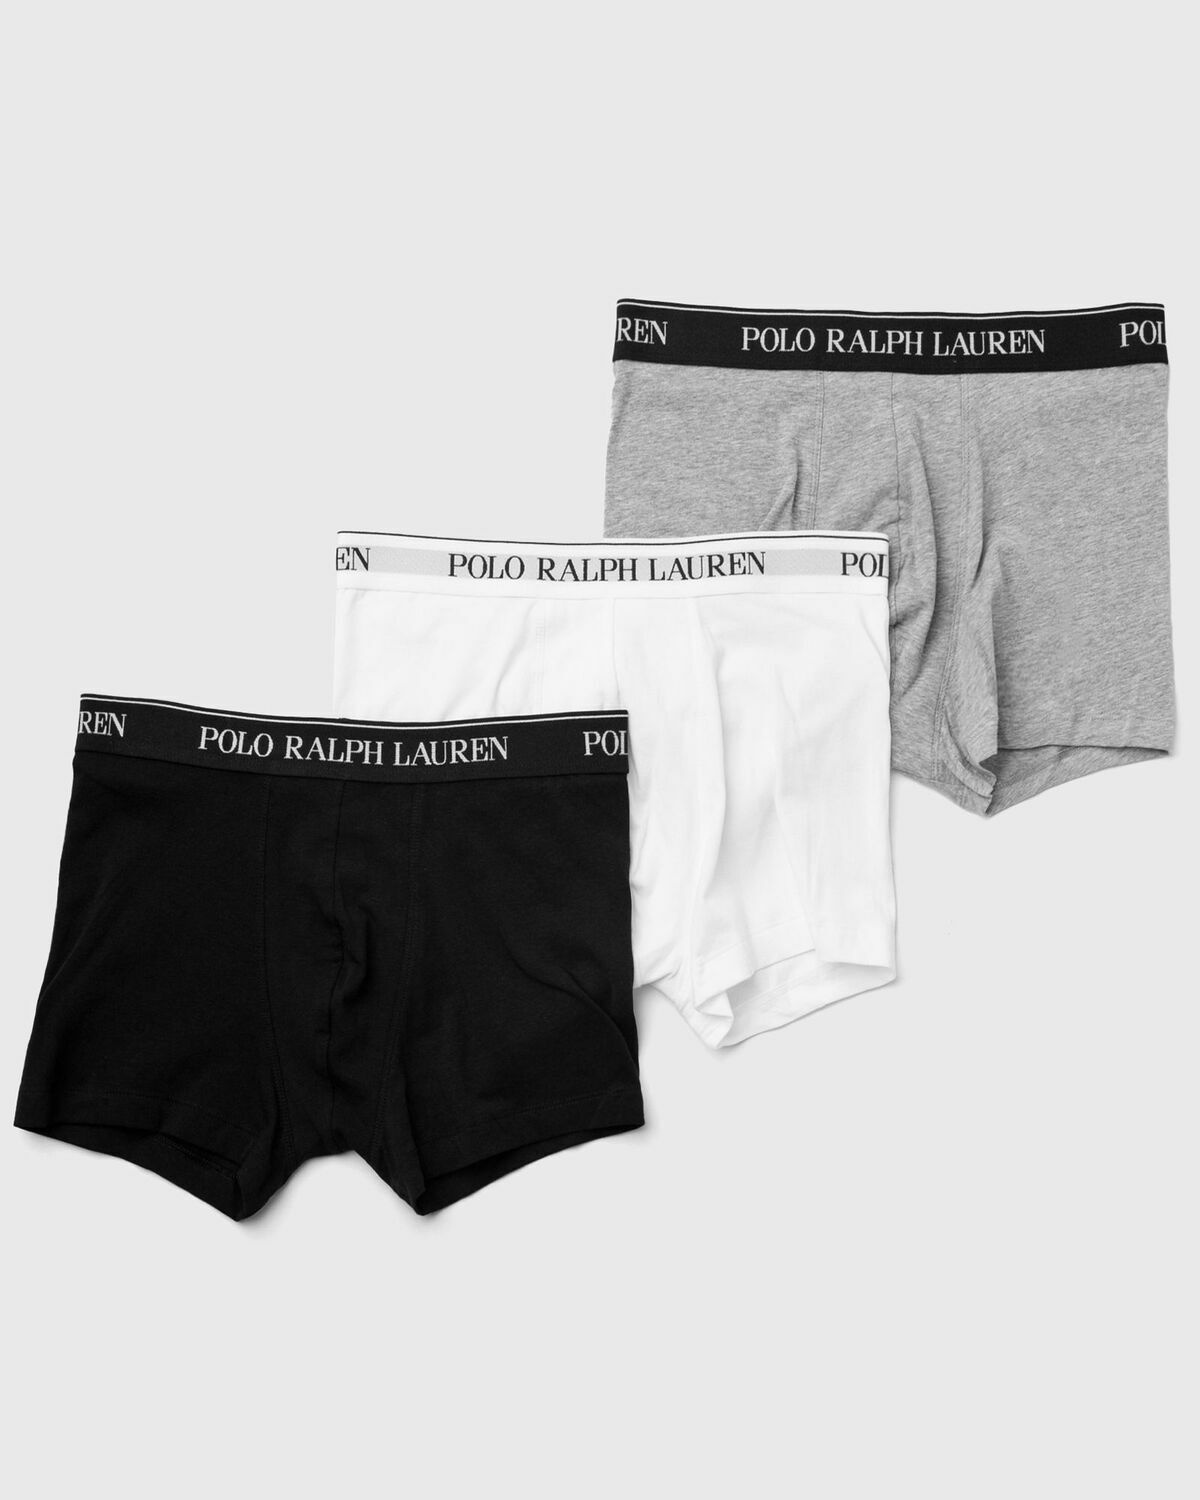 Polo Ralph Lauren Classic 3 Pack Trunk Multi - Mens - Boxers & Briefs Polo  Ralph Lauren